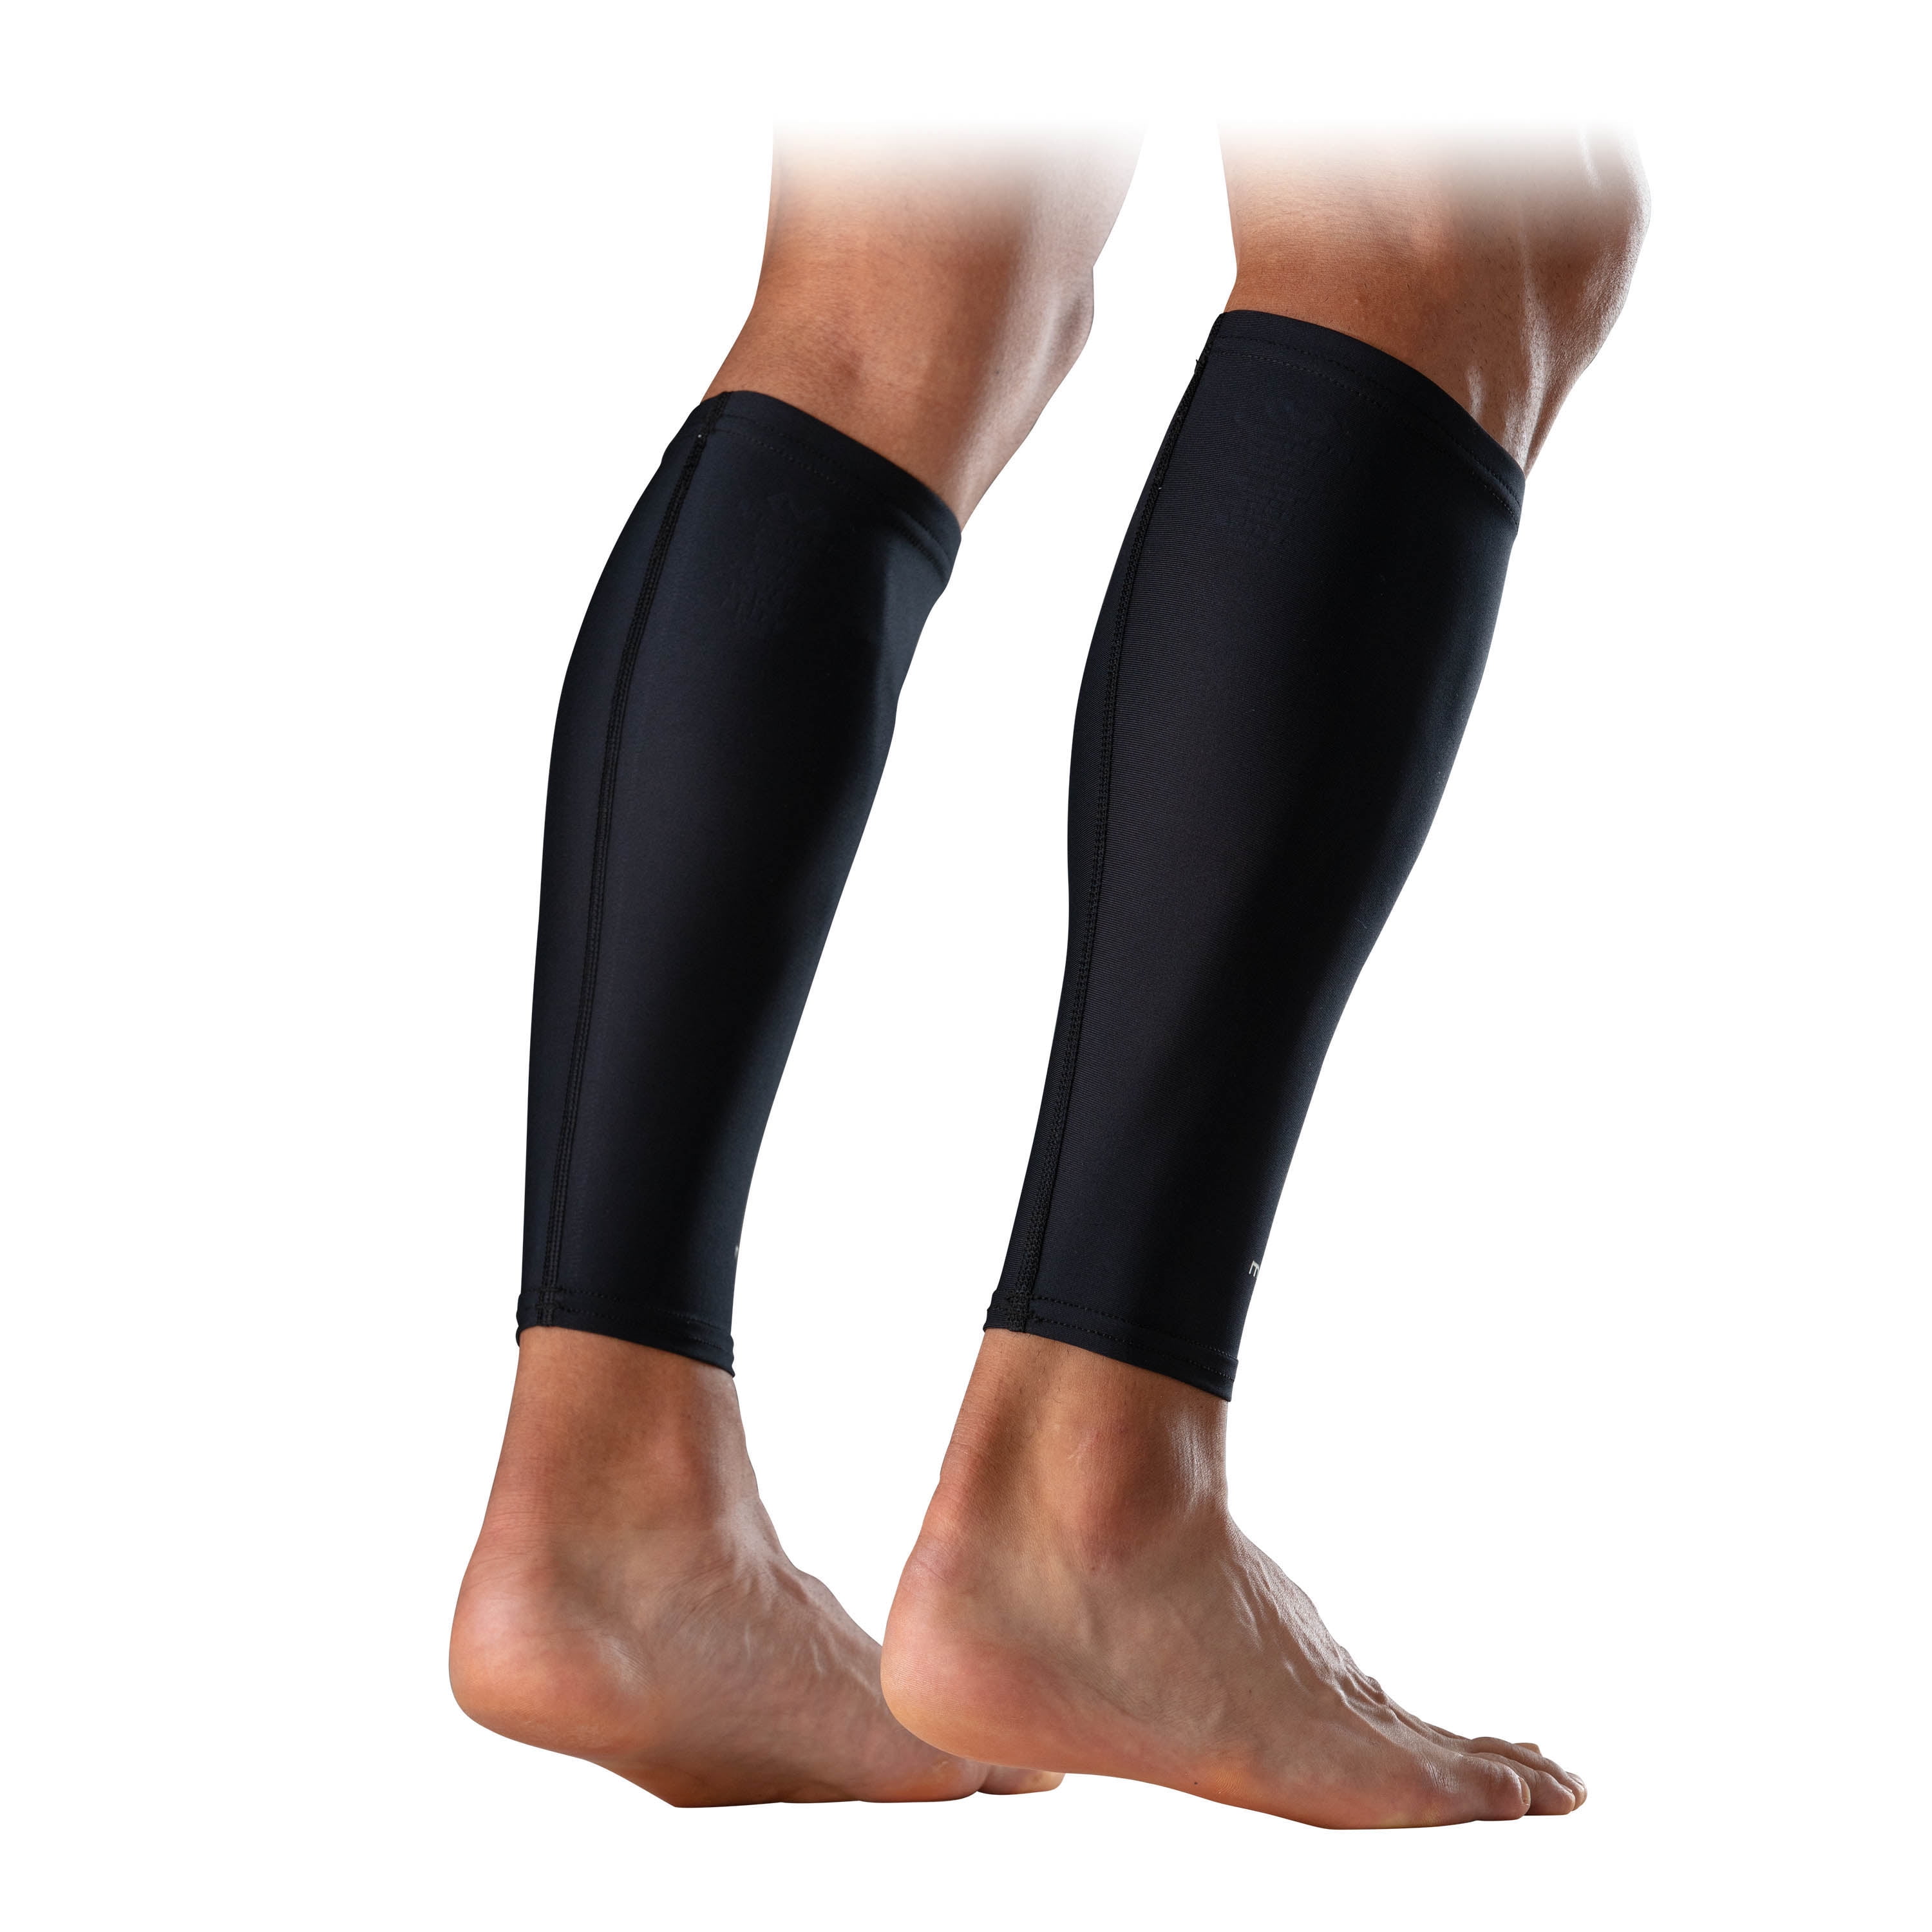 McDavid Sport Compression Calf Sleeves, Pair, Black, Unisex, Adult